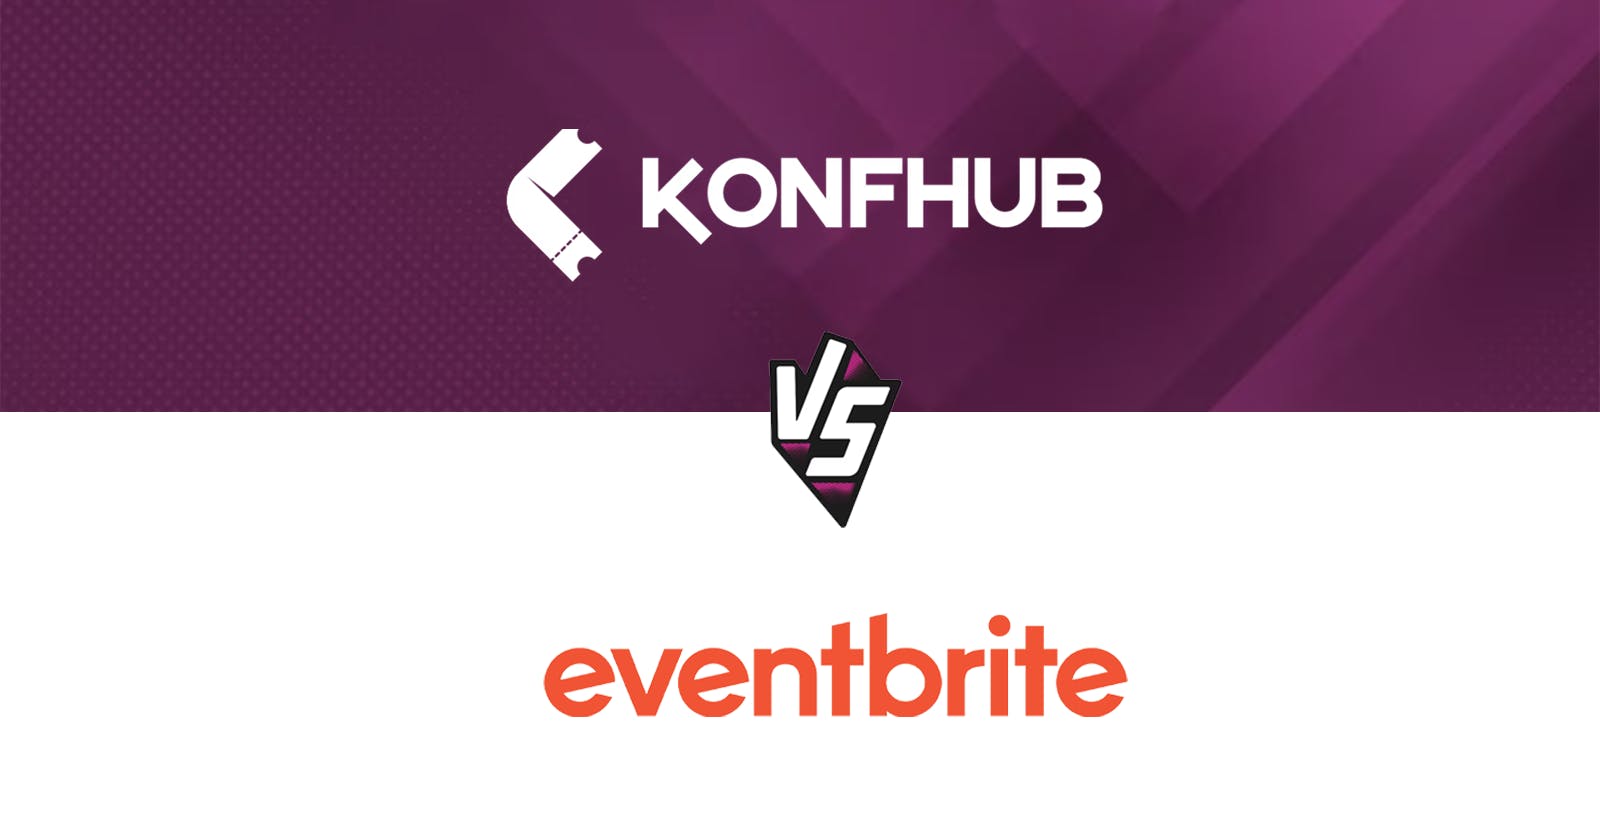 KonfHub: A More Comprehensive Alternative To Eventbrite